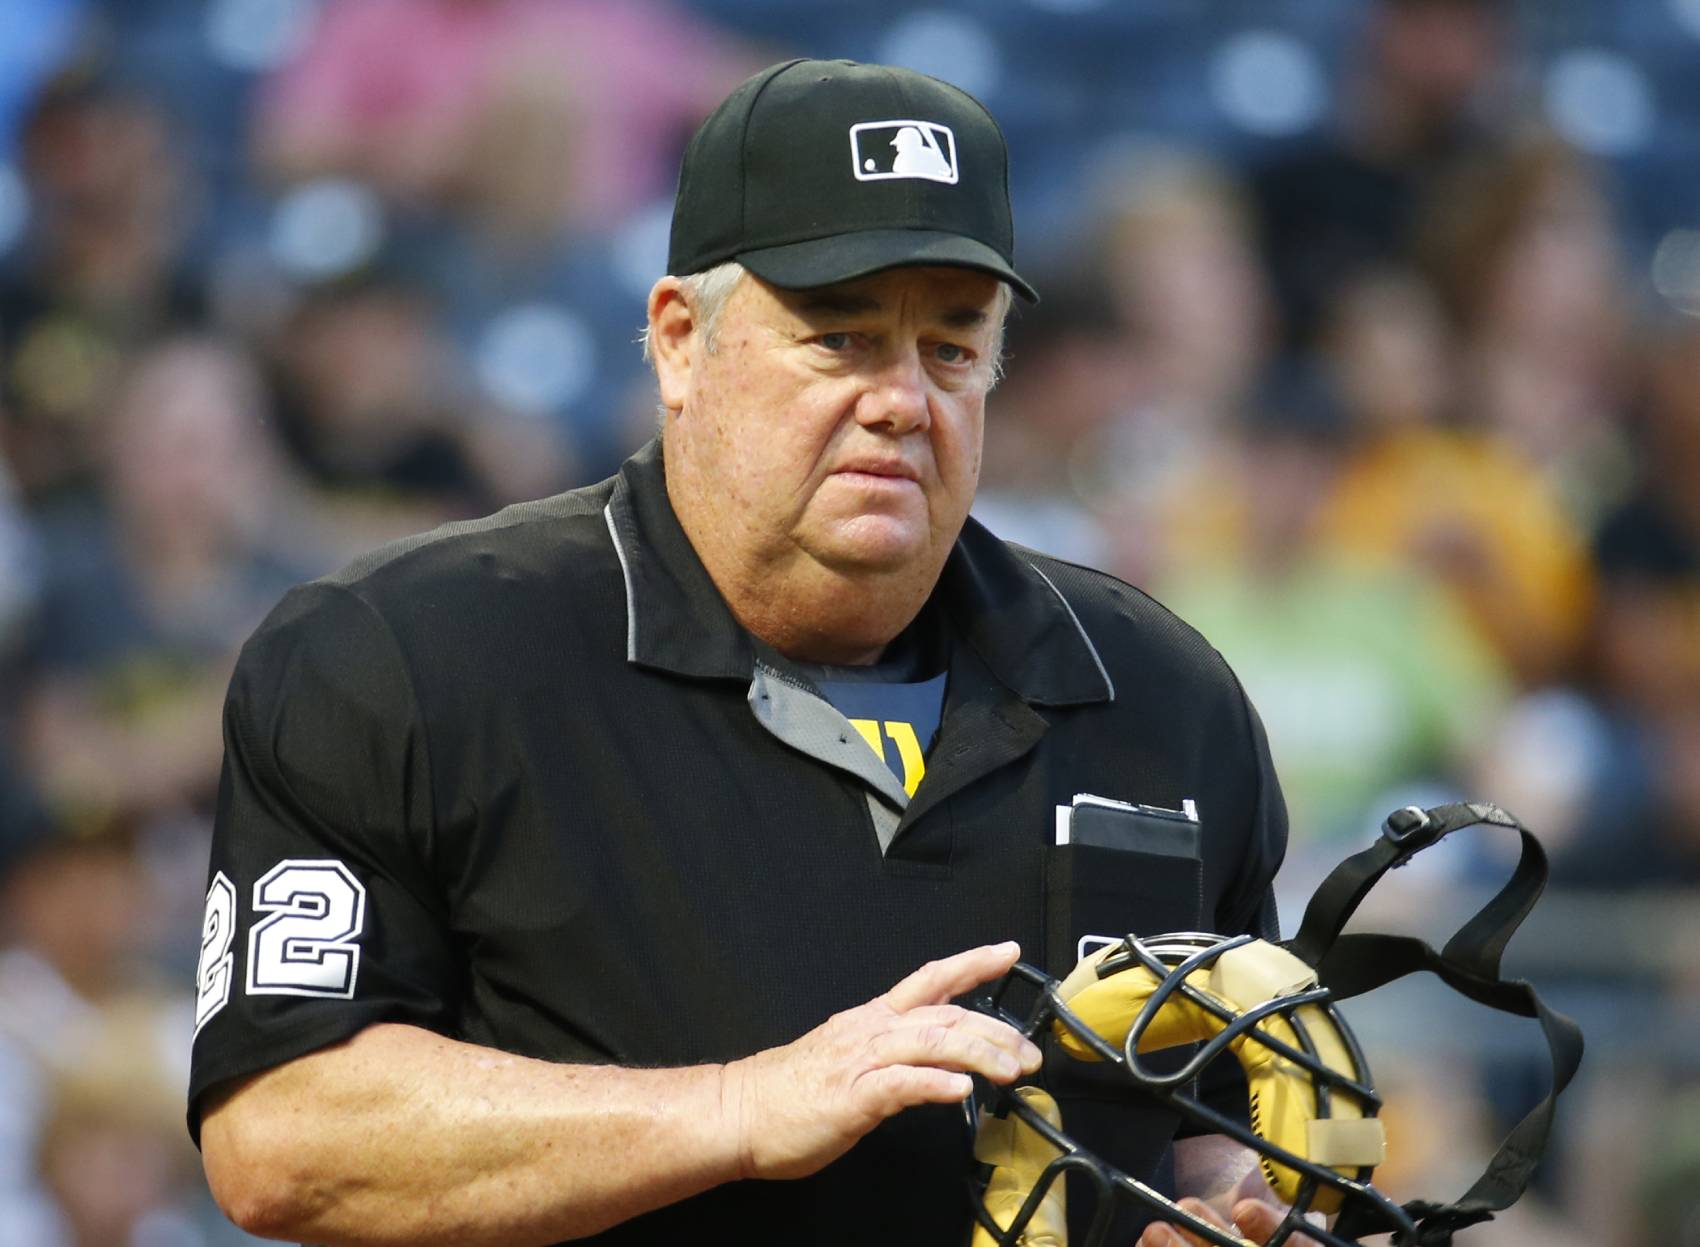 Veteran MLB umpire Joe West intends to work this season despite the COVID-19 risks. 